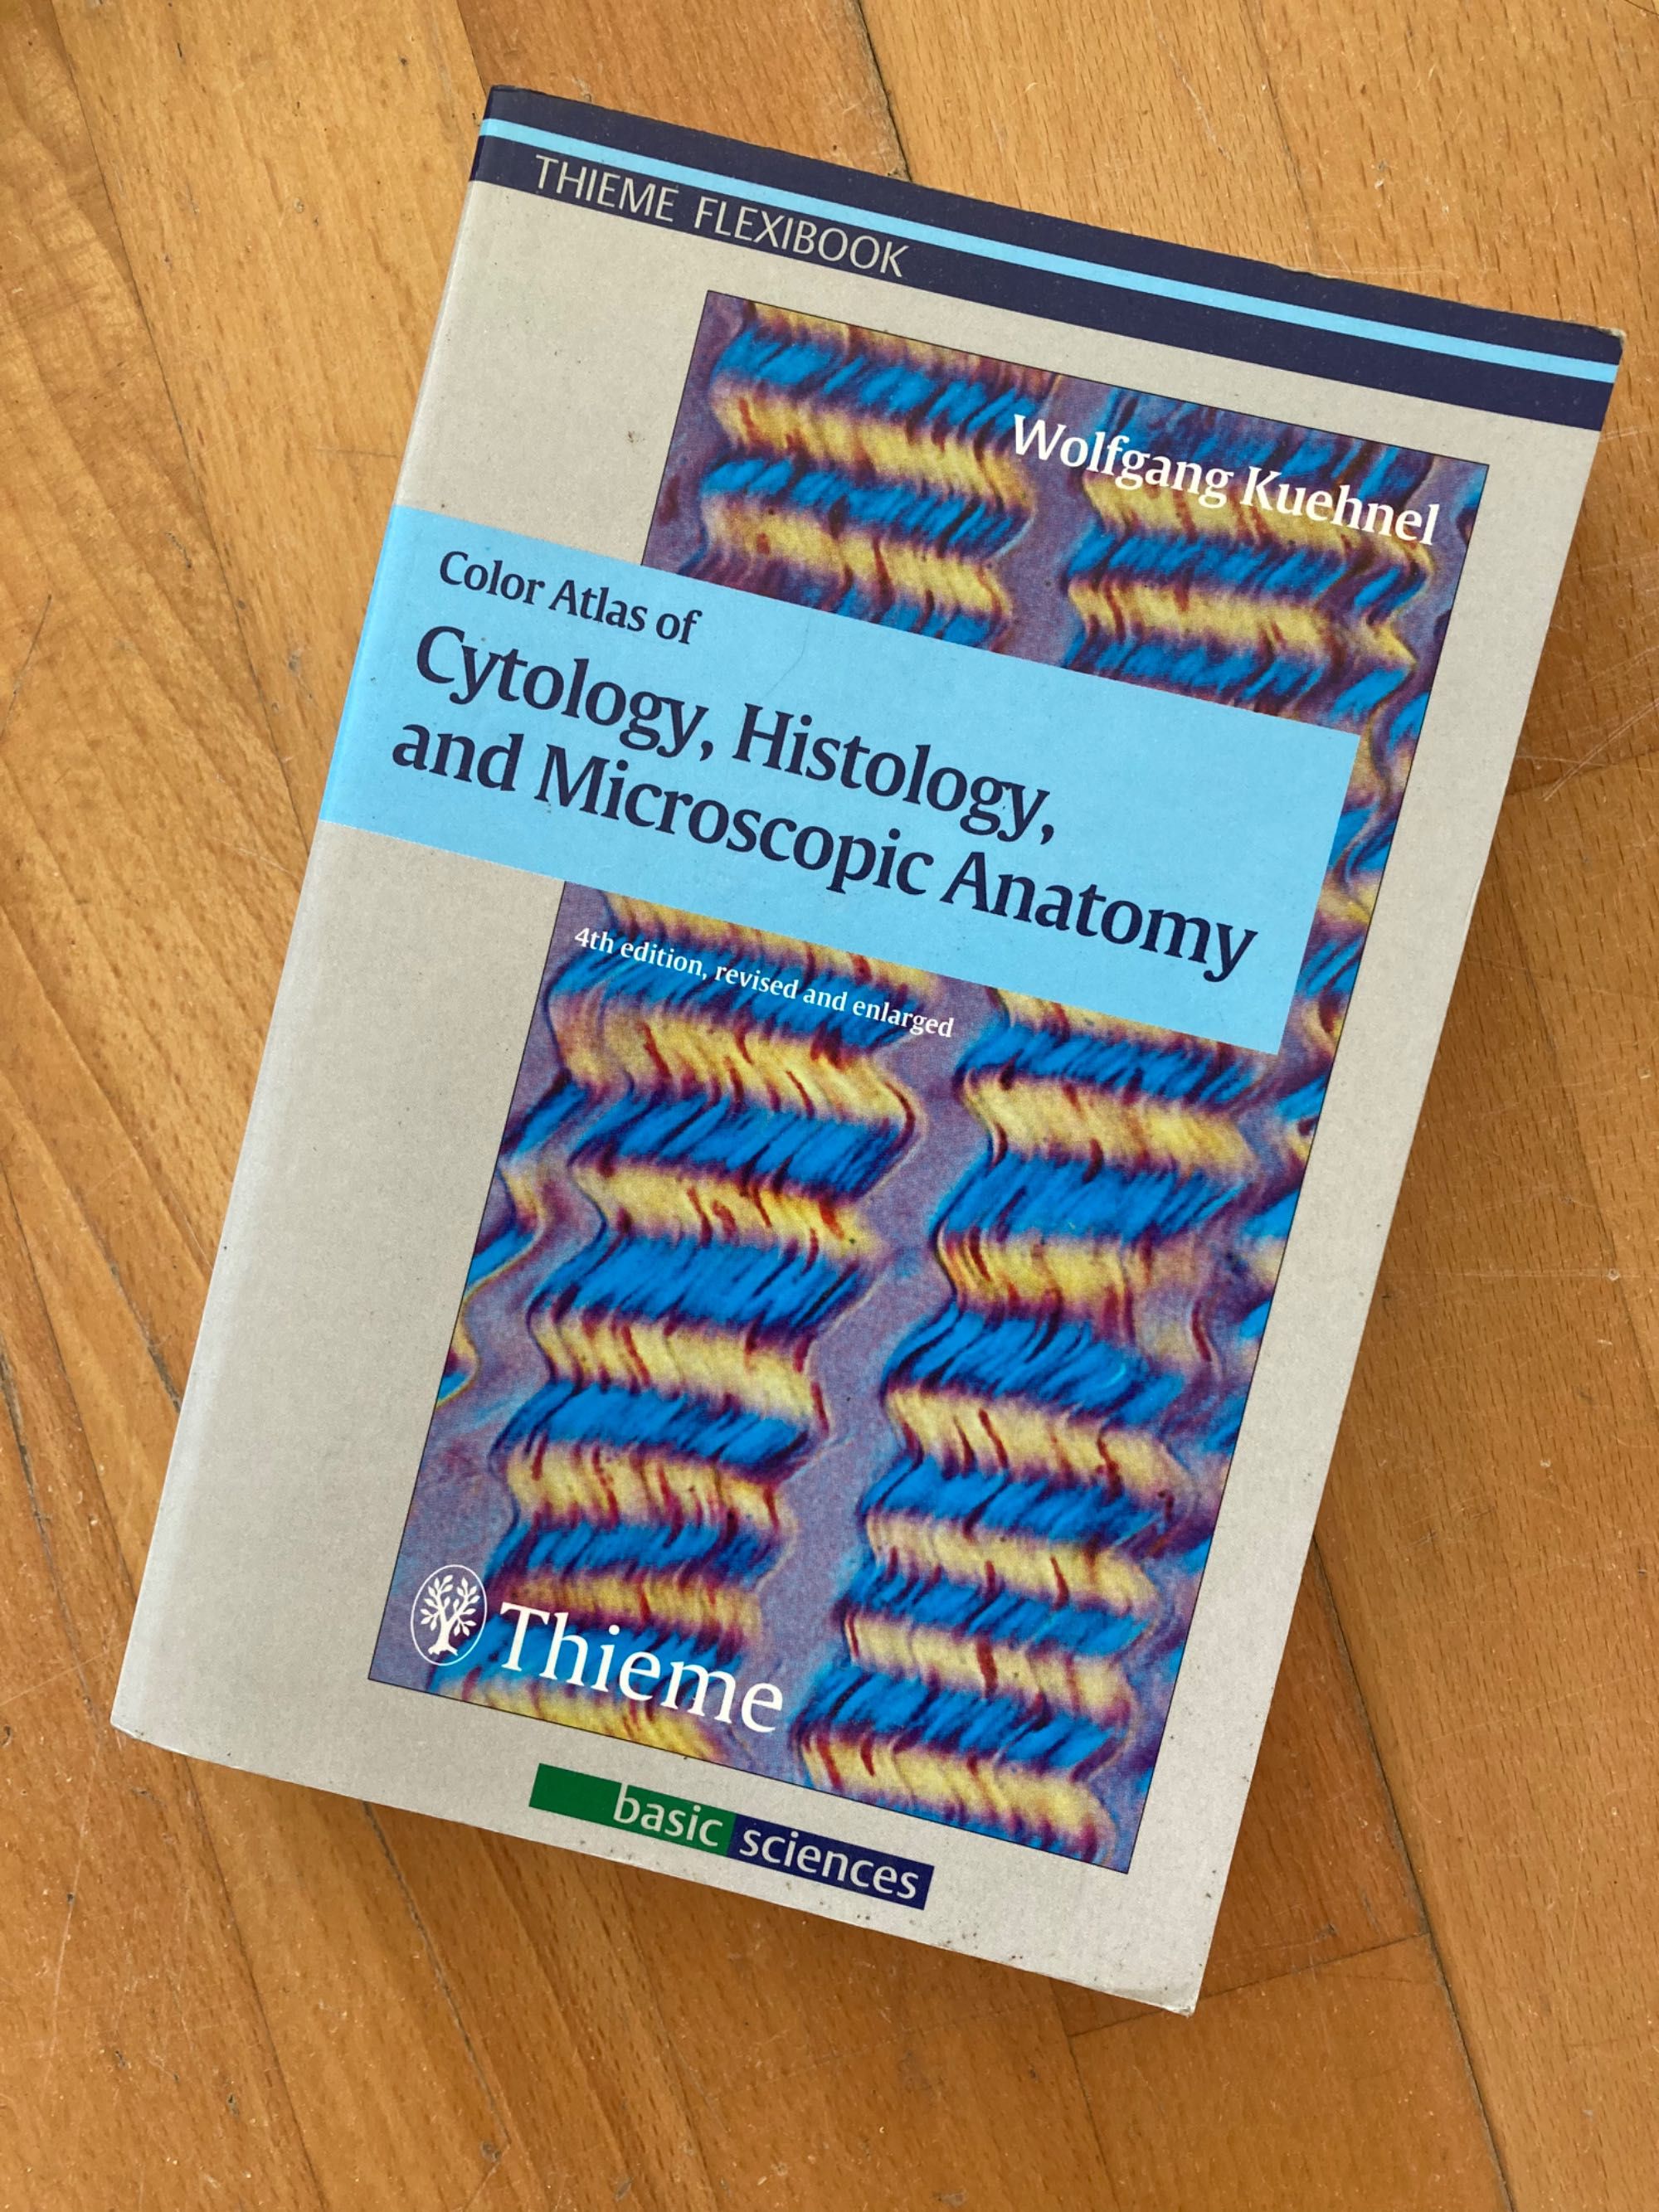 Livro Cytology, Histology, and Microscopic Anatomy - Wolfgang Kuehnel